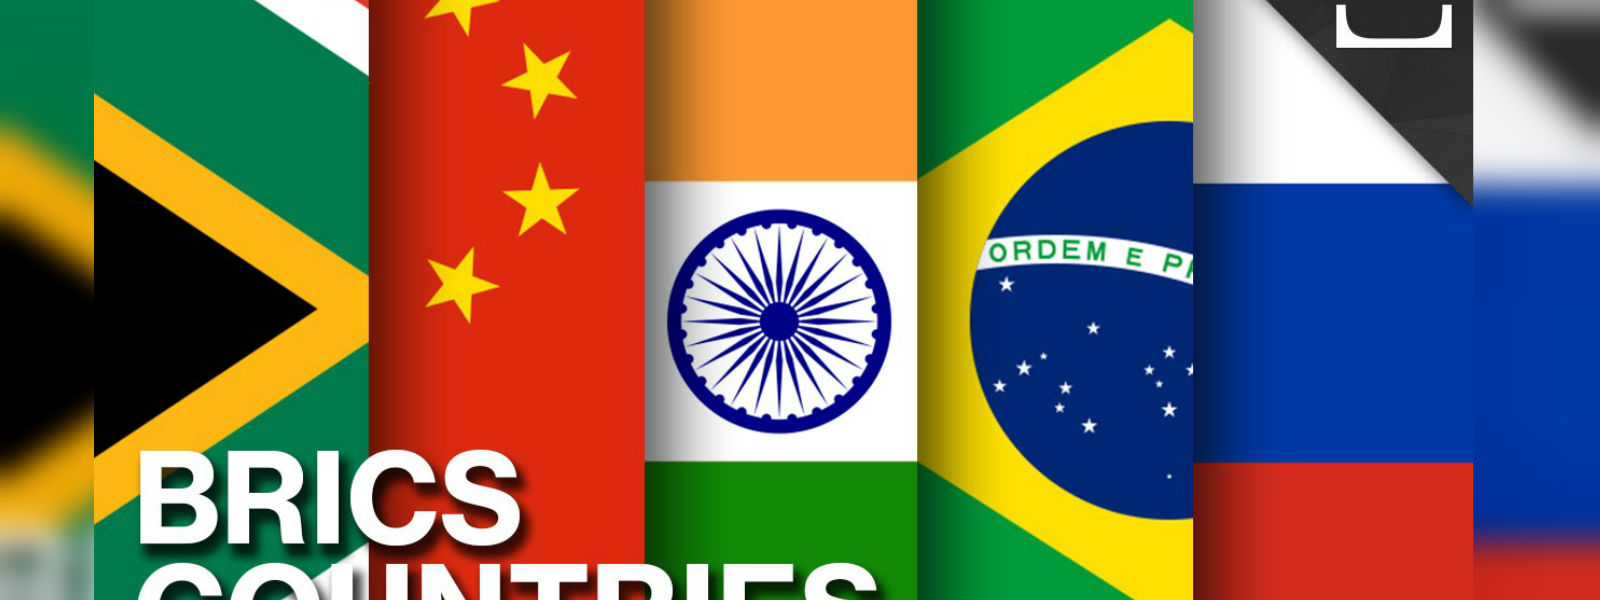 BRICS mechanism benefits whole world - Argentines